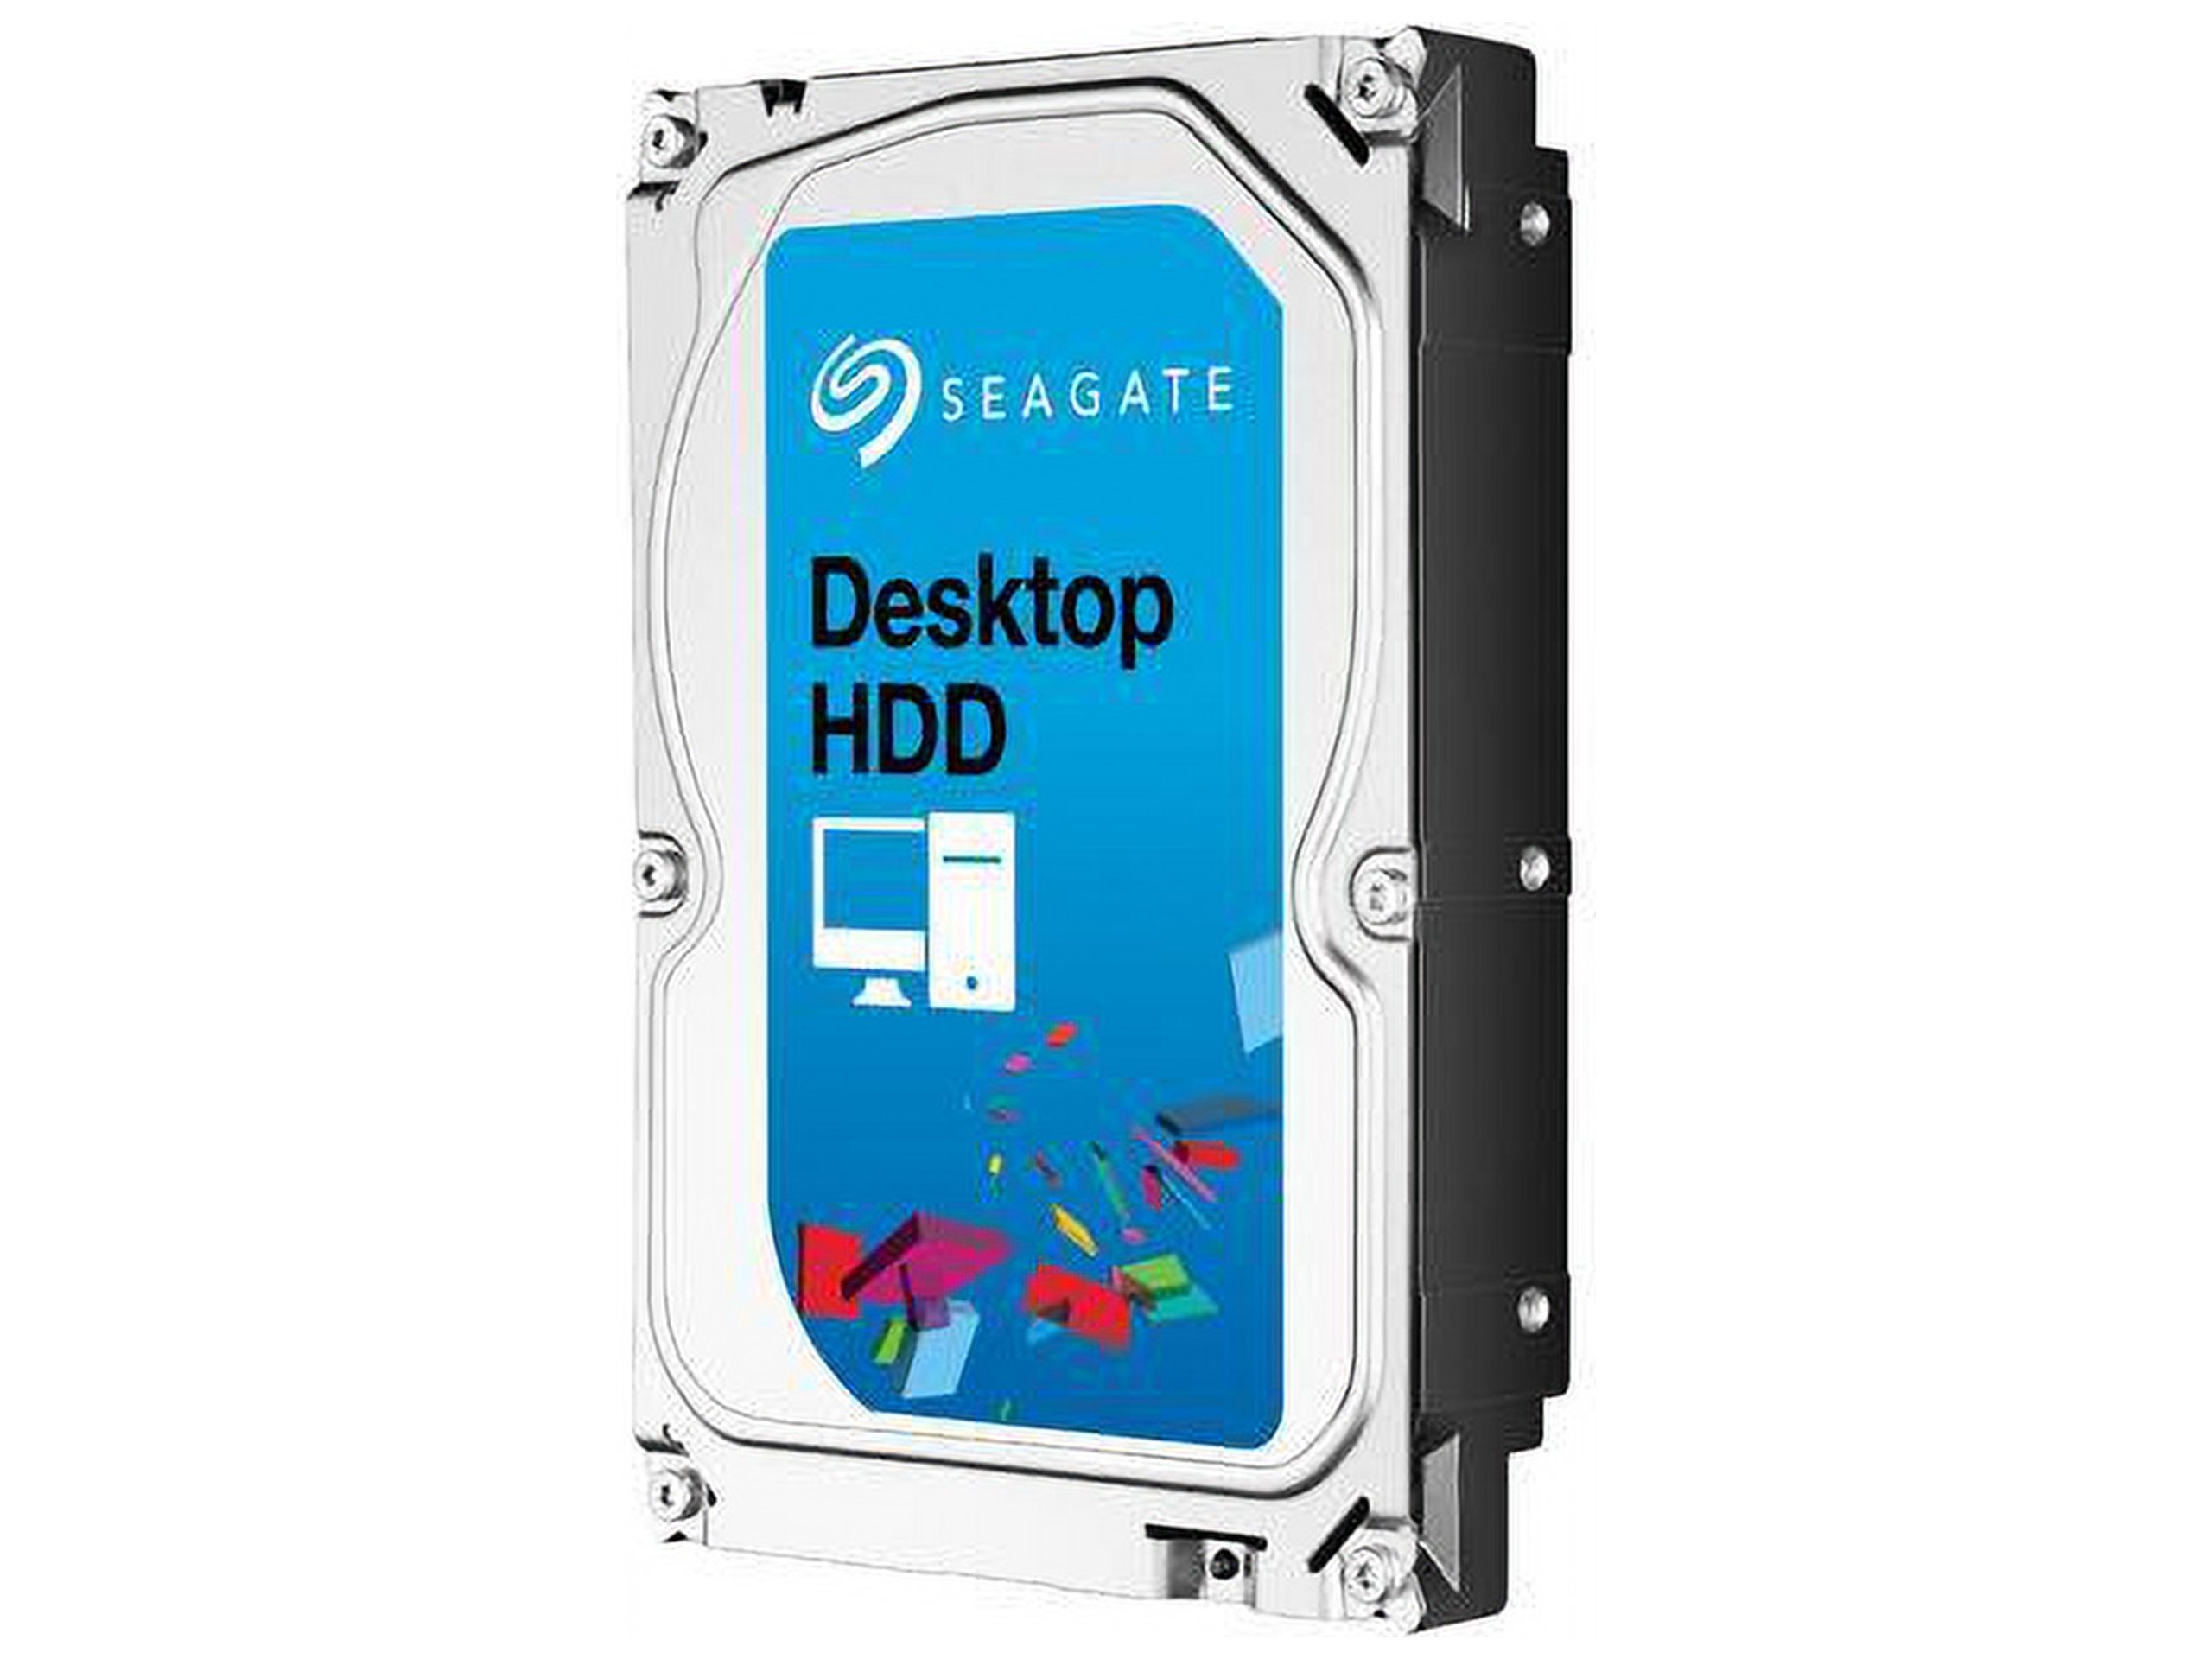 Seagate Desktop HDD ST1000DM003 1TB 64MB Cache SATA 6.0Gb/s 3.5" Internal Hard Drive Bare Drive - image 2 of 3